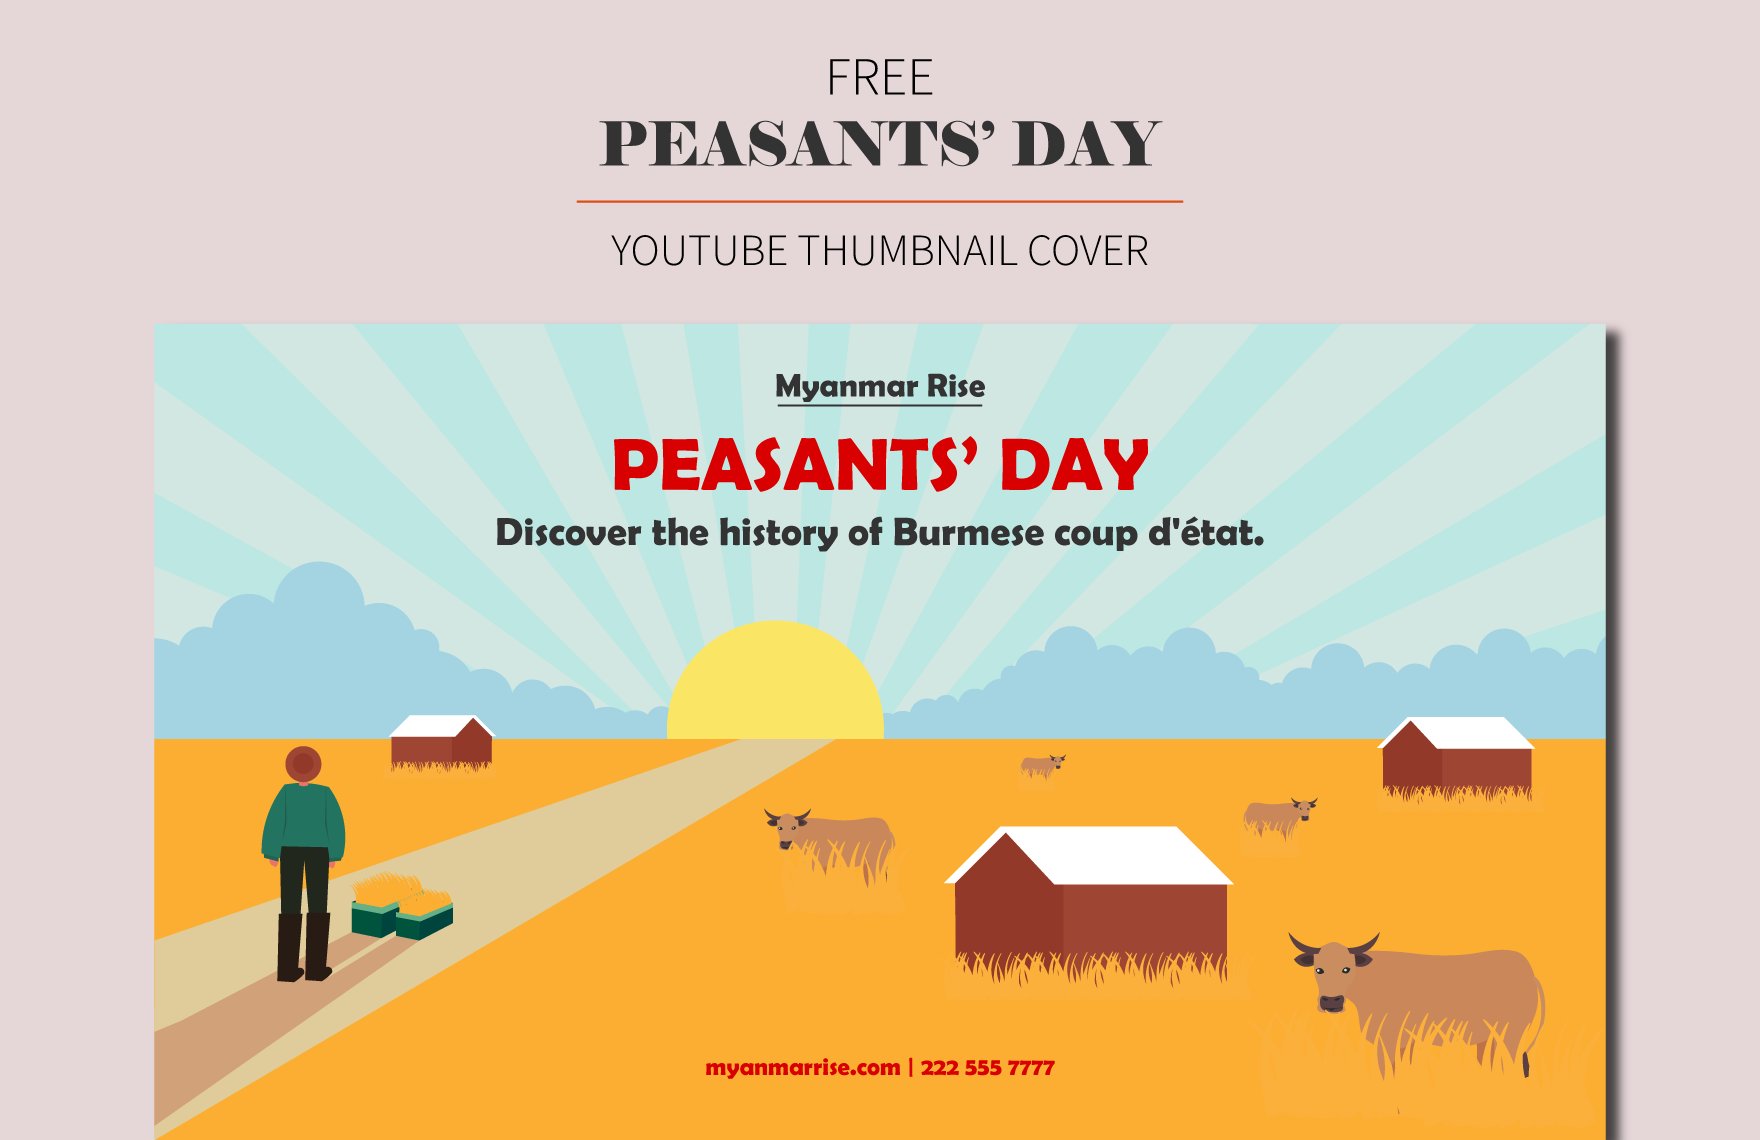 Free Peasants Day  Youtube Thumbnail Cover in PDF, Illustrator, SVG, JPG